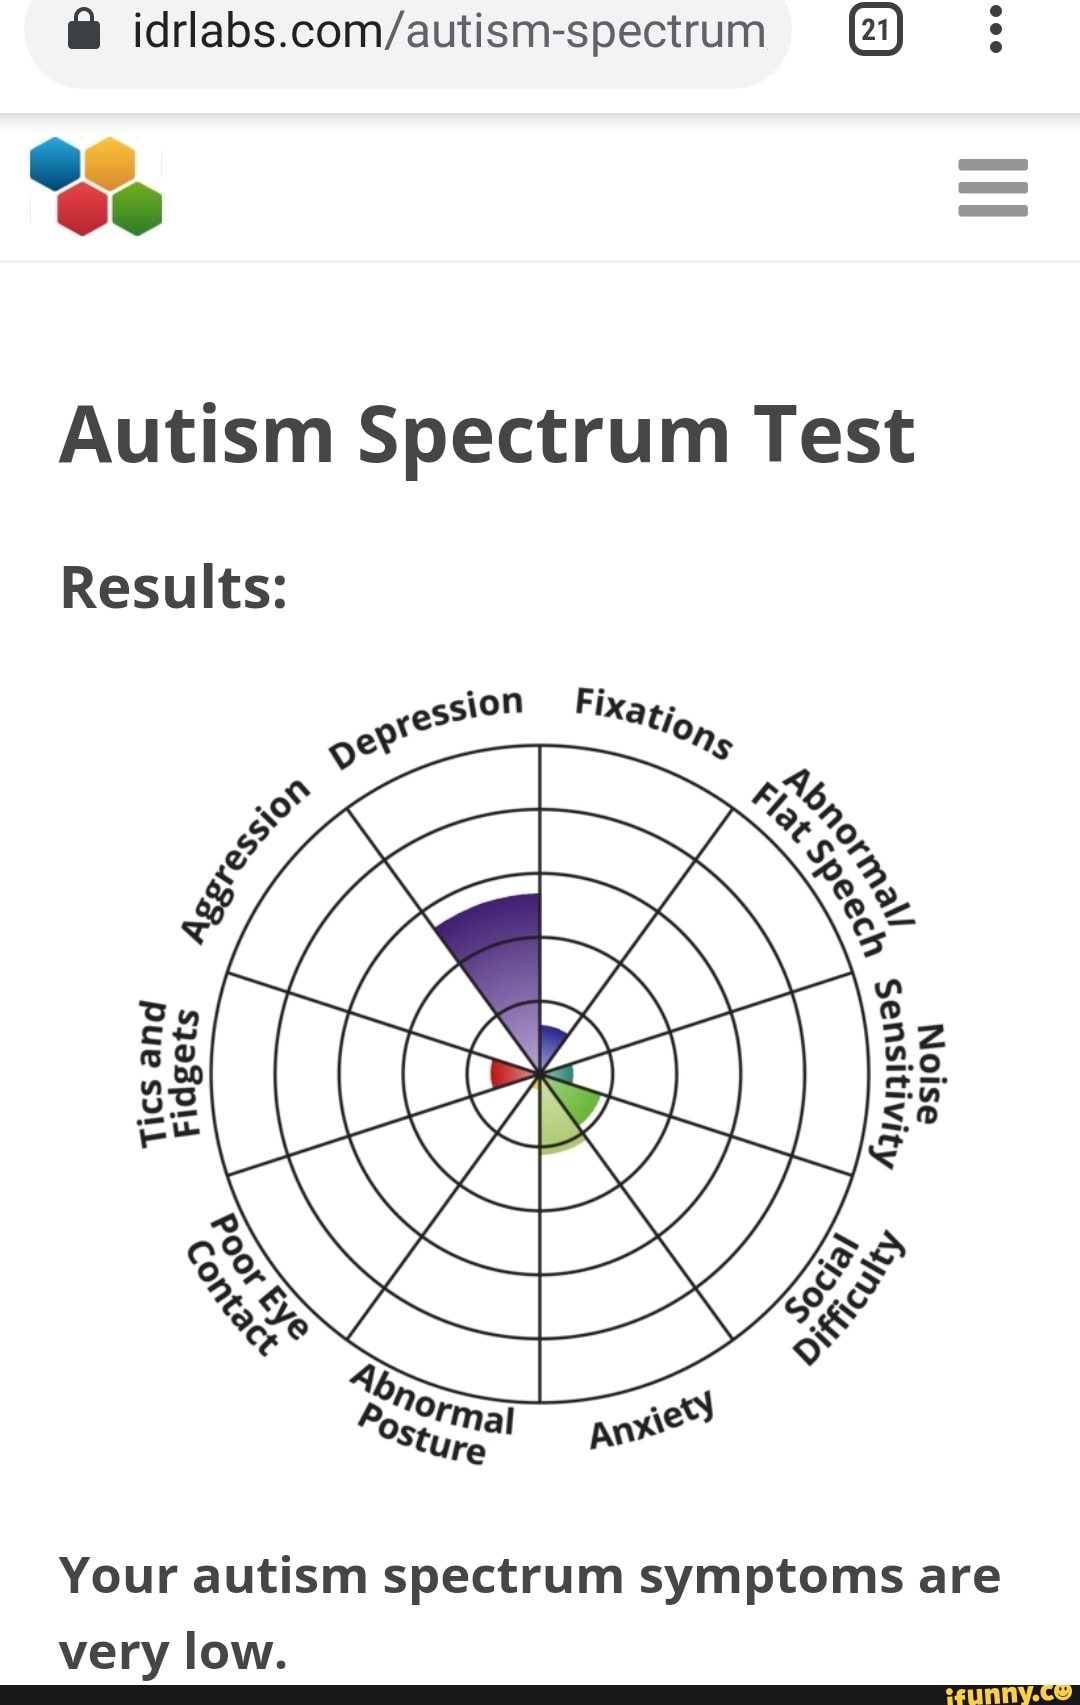 childhood autism spectrum test cast scoring key